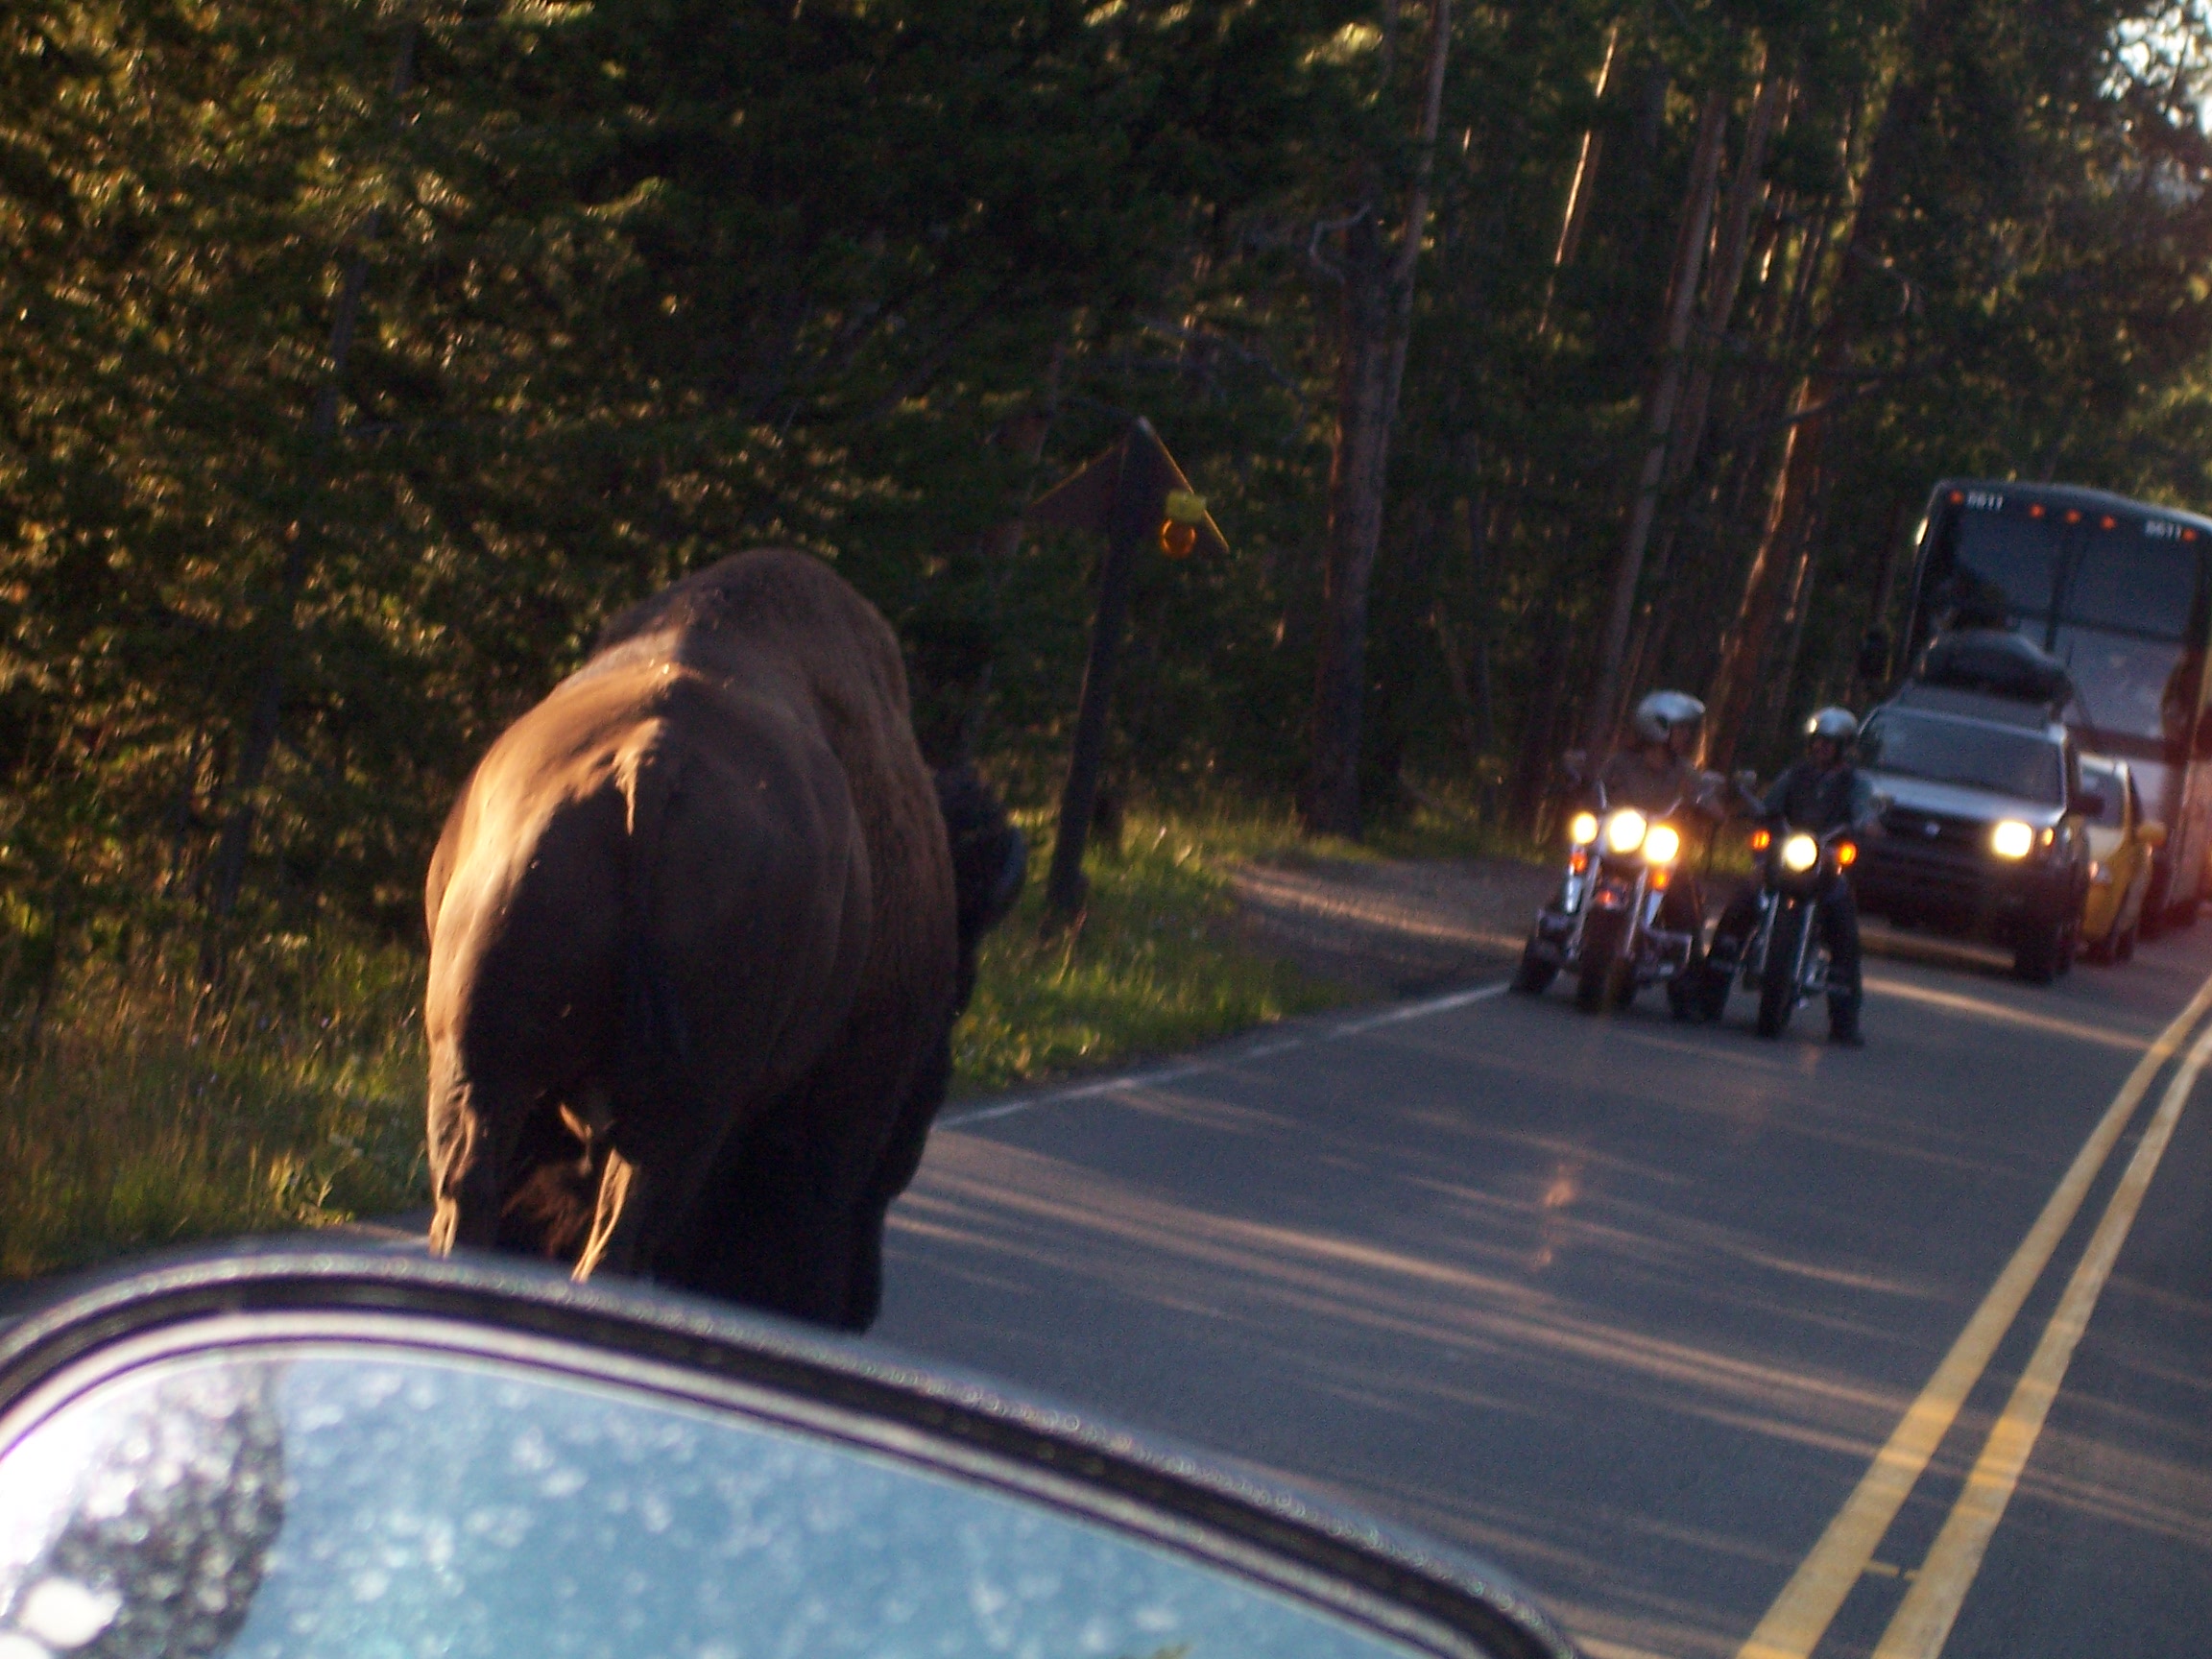 Buffalo on the road.